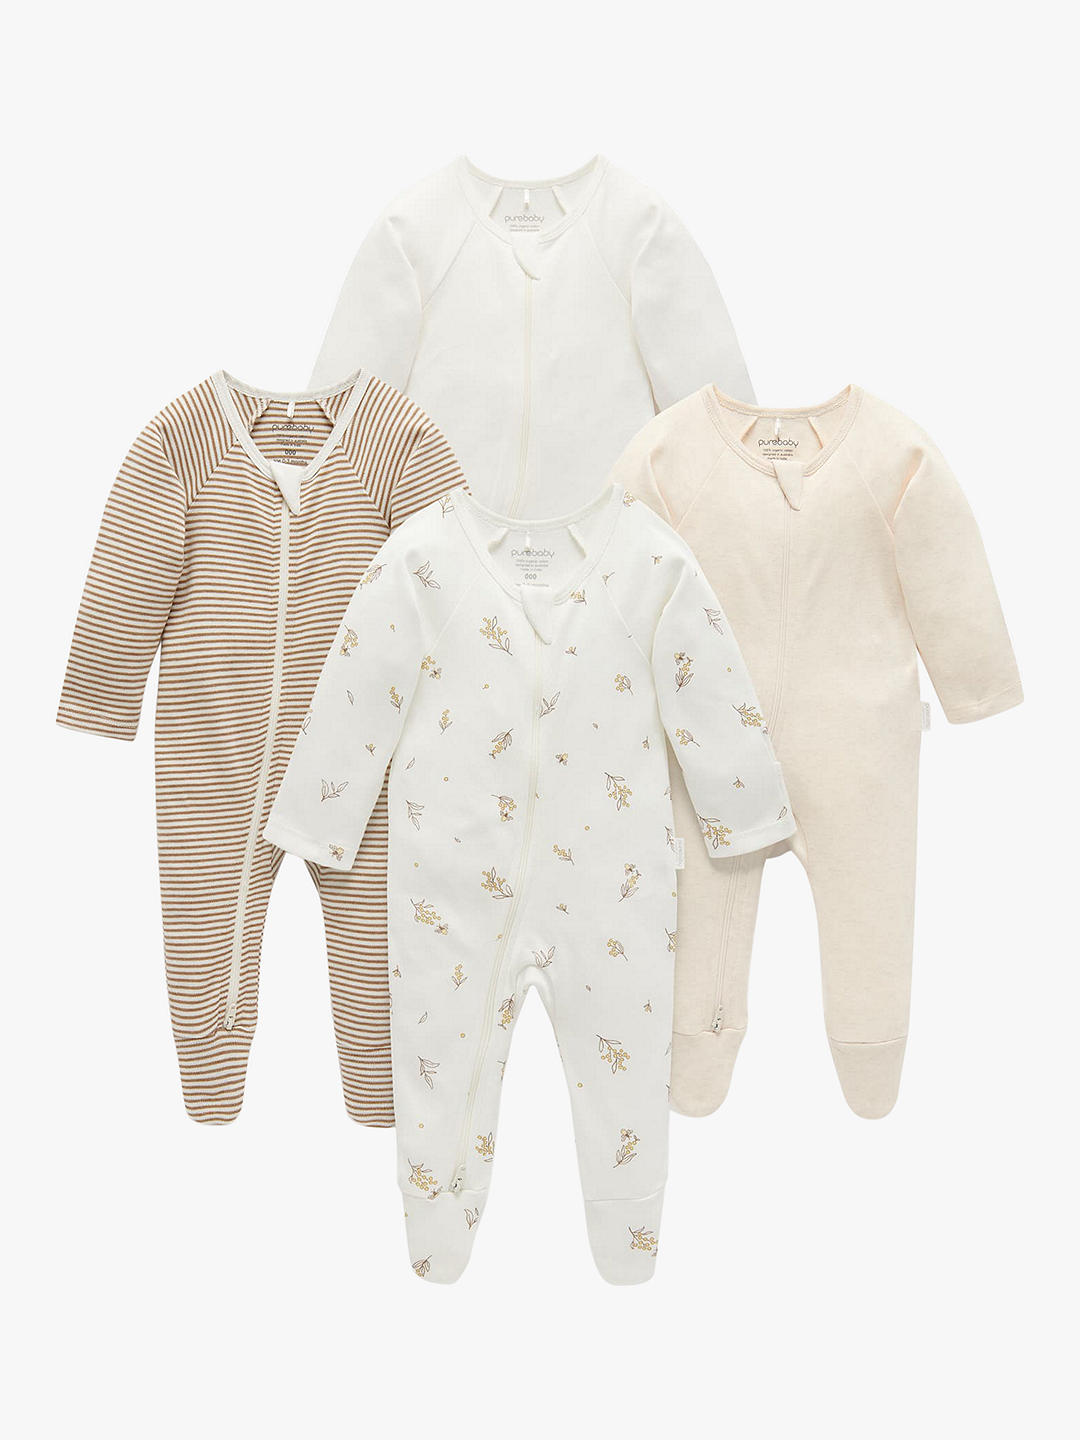 Purebaby Baby Organic Cotton Floral/Stripe/Plain Sleepsuits, Pack of 4, Vanilla Wattlebee